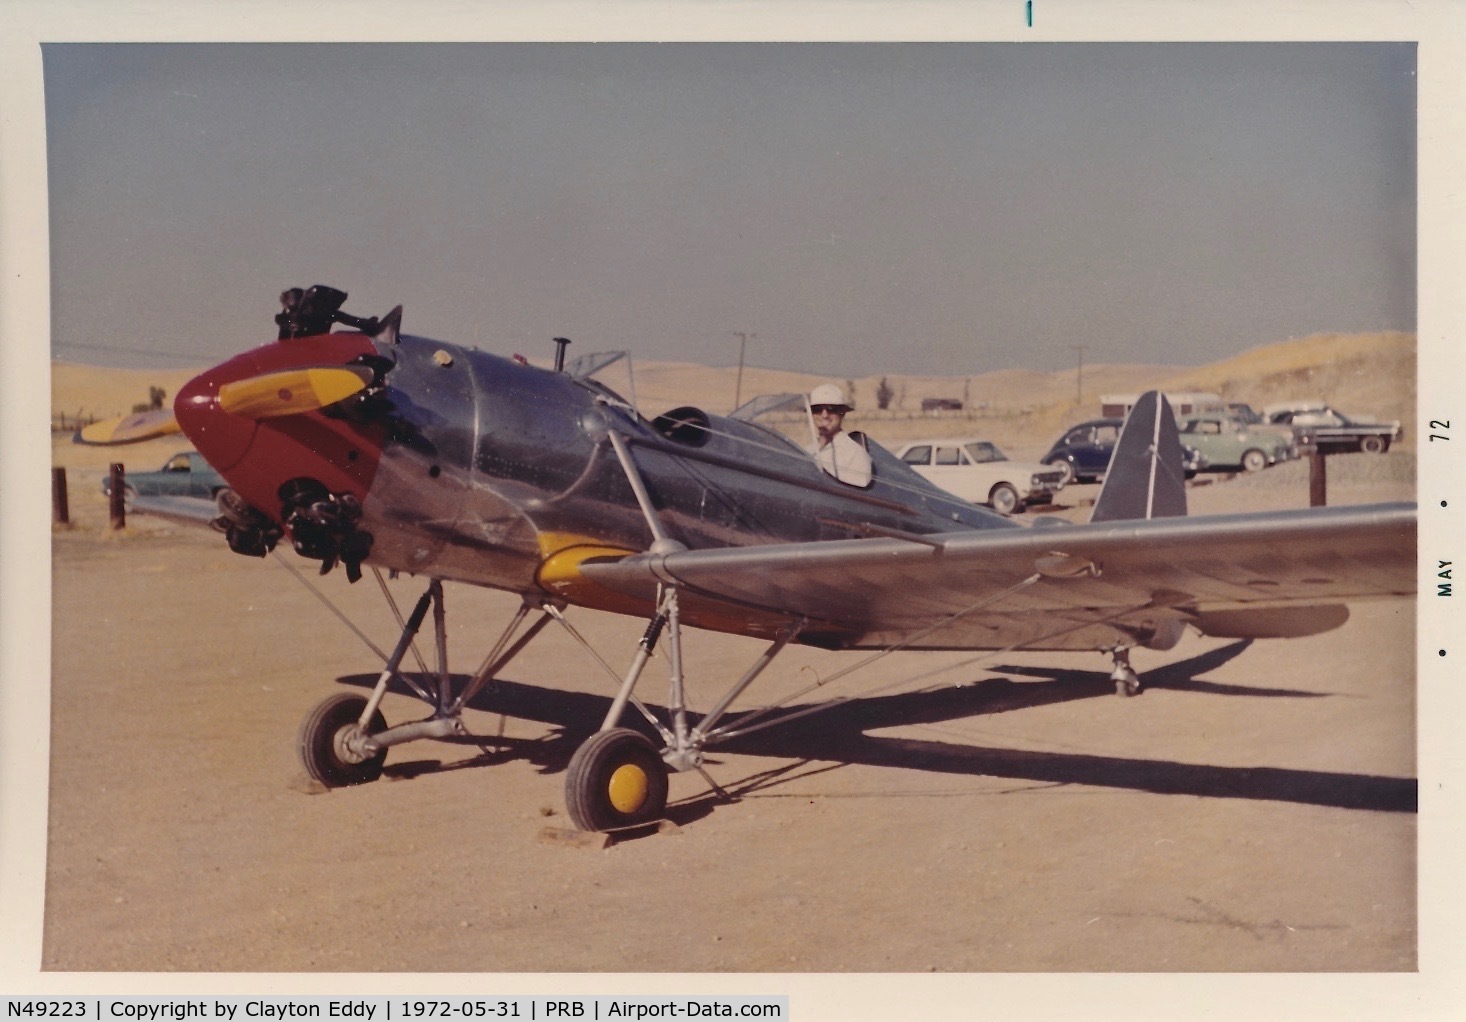 N49223, 1941 Ryan Aeronautical ST3KR C/N 1014, Paso Robles flyin California May 1972.